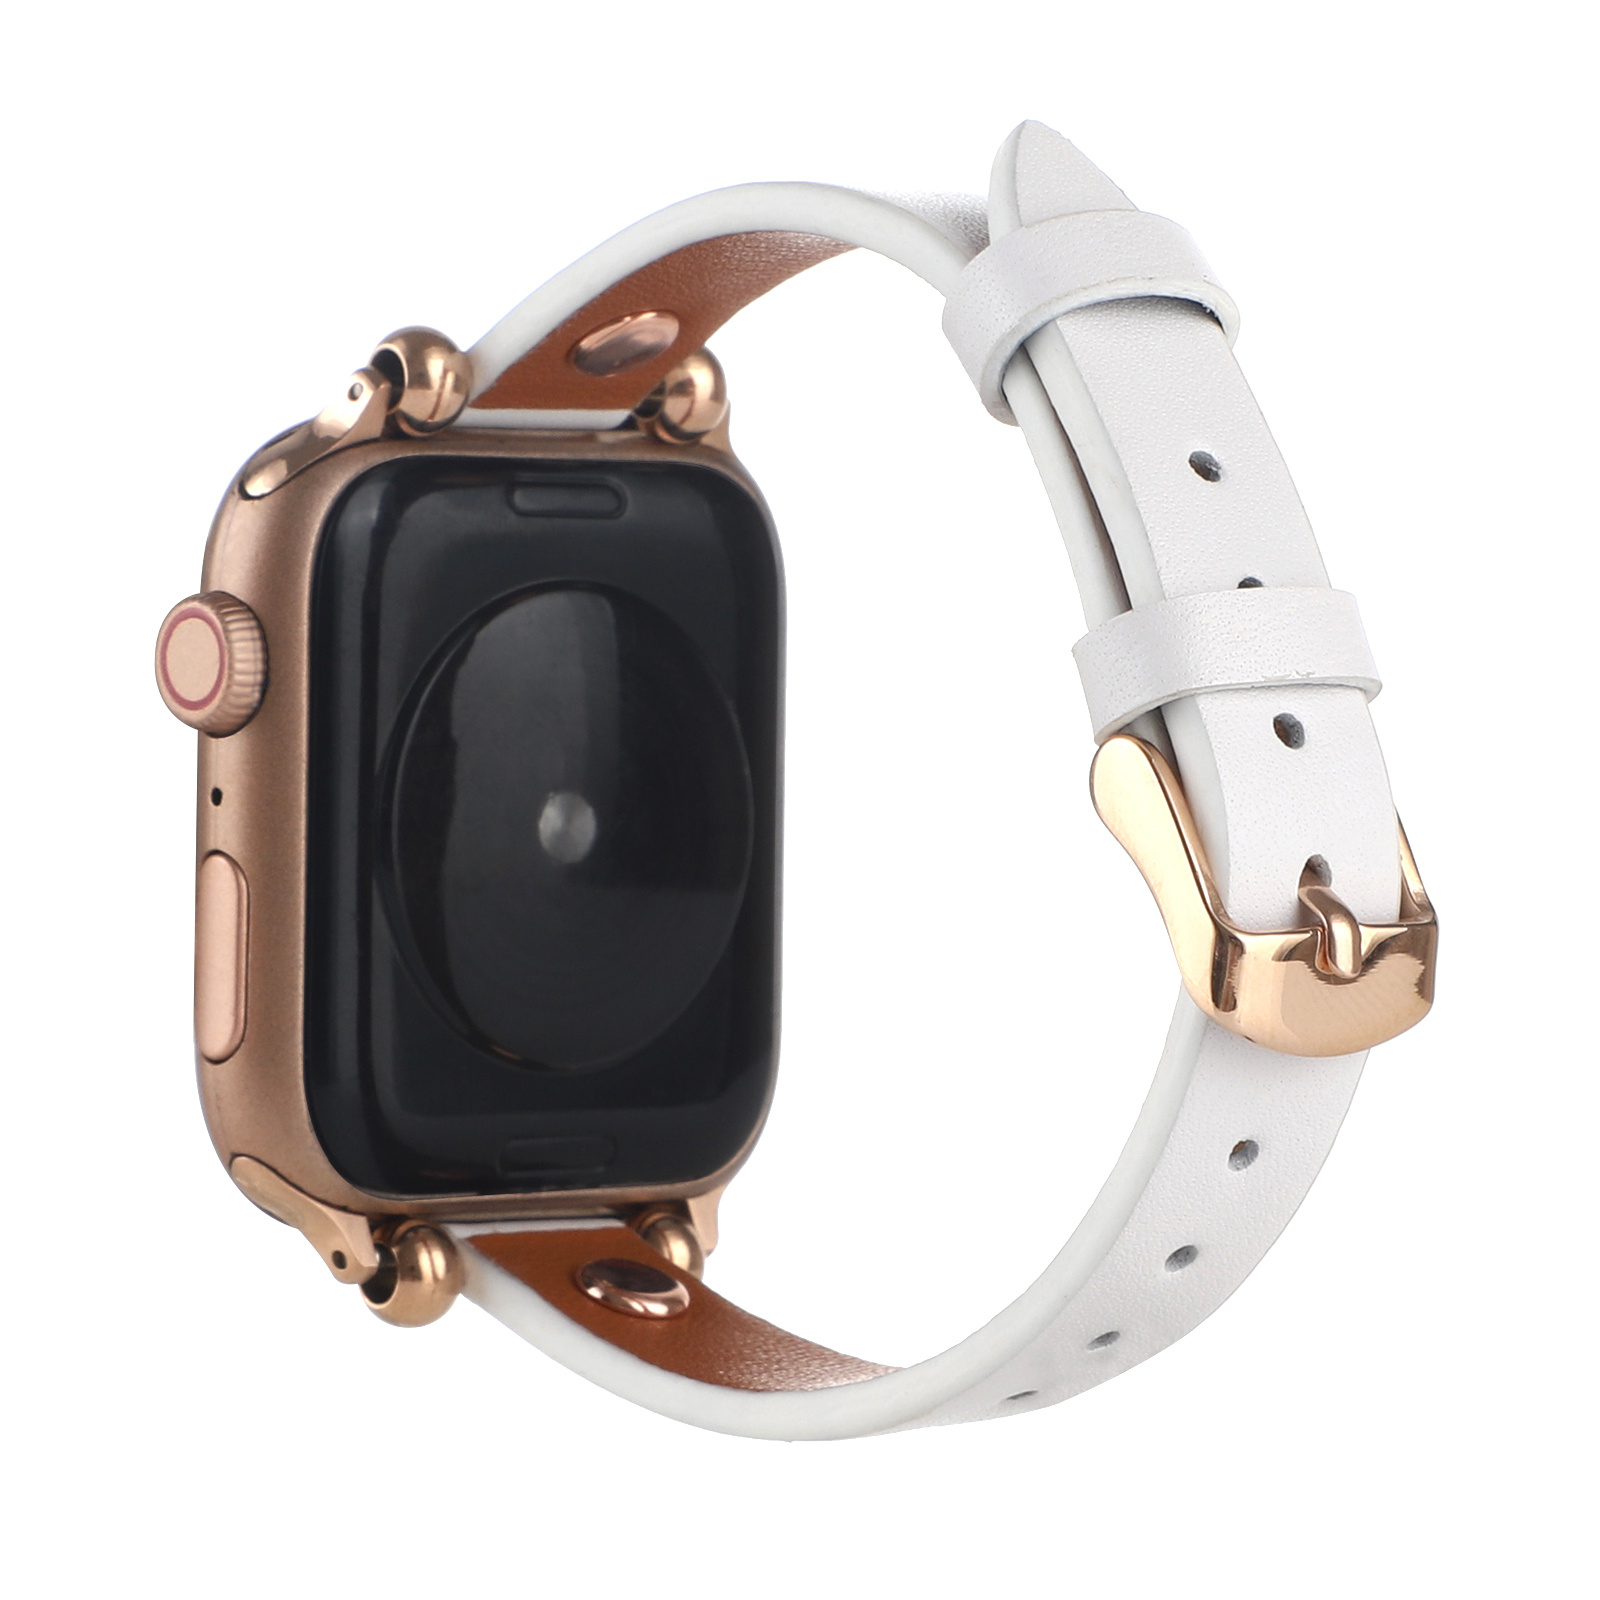 Apple Watch schlankes Lederarmband - weiß